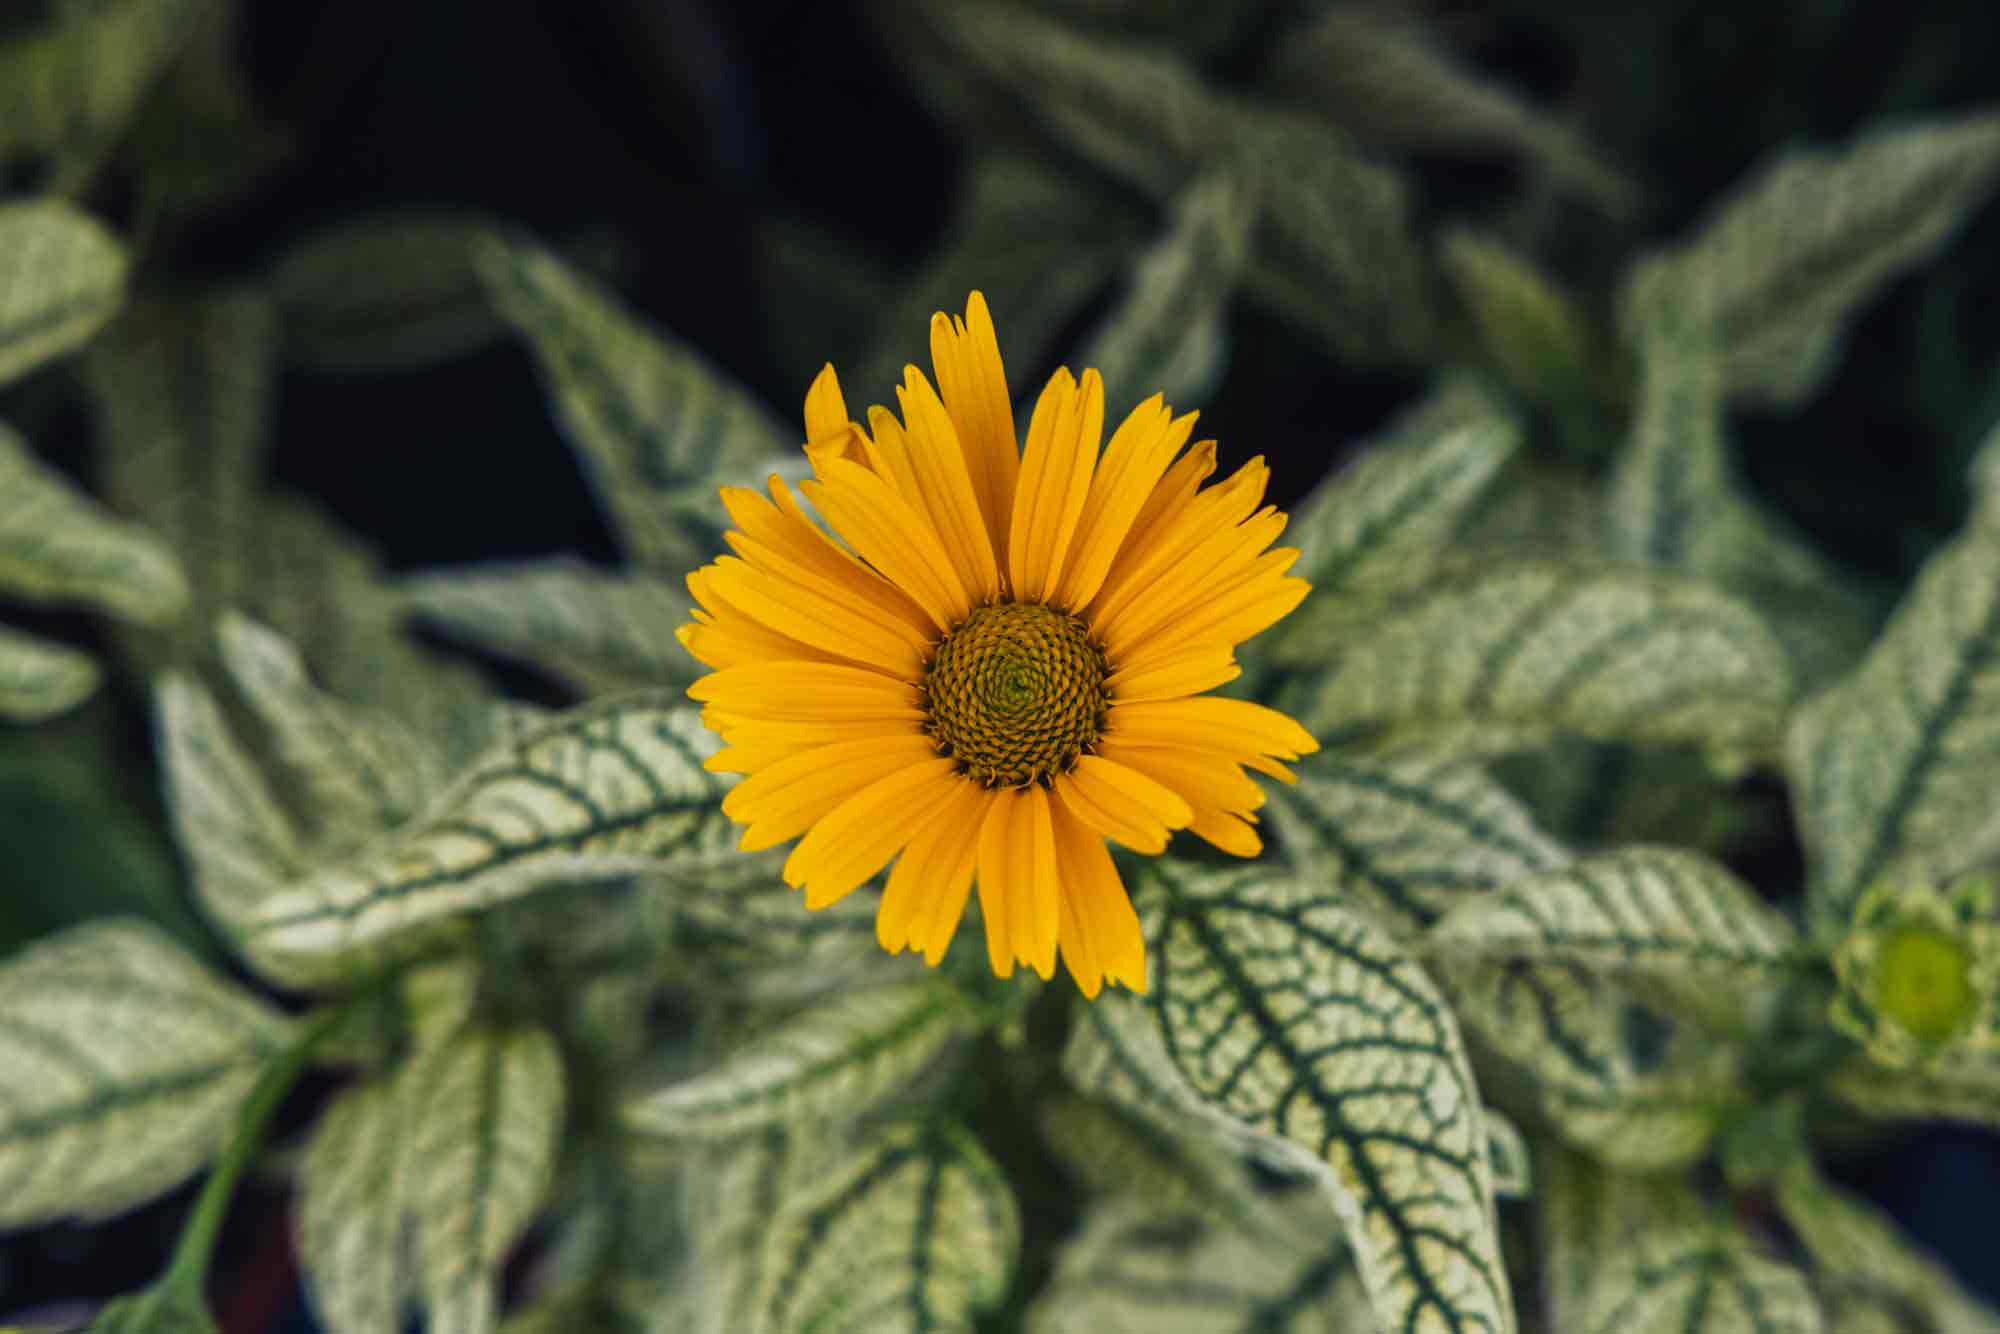 False Sunflowers